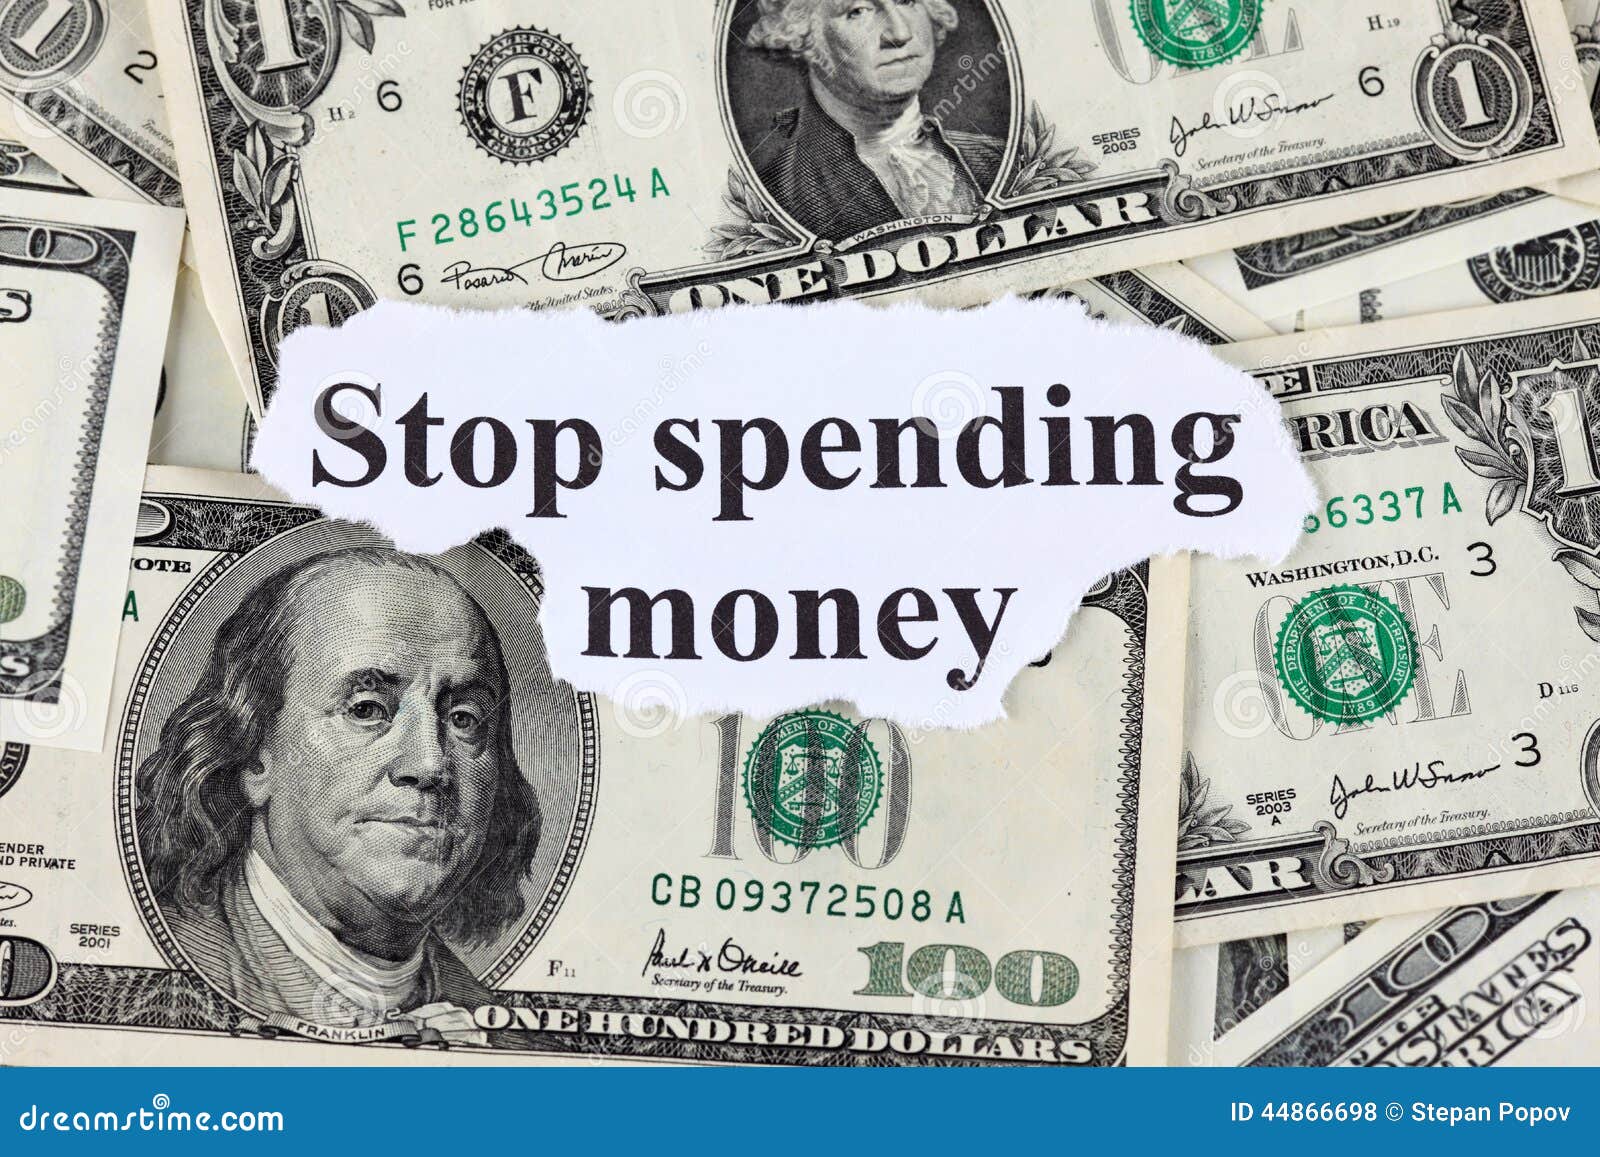 Вашингтон деньги. Stop spending money. Stop spending money illustration. 21 Ways to stop spending money.